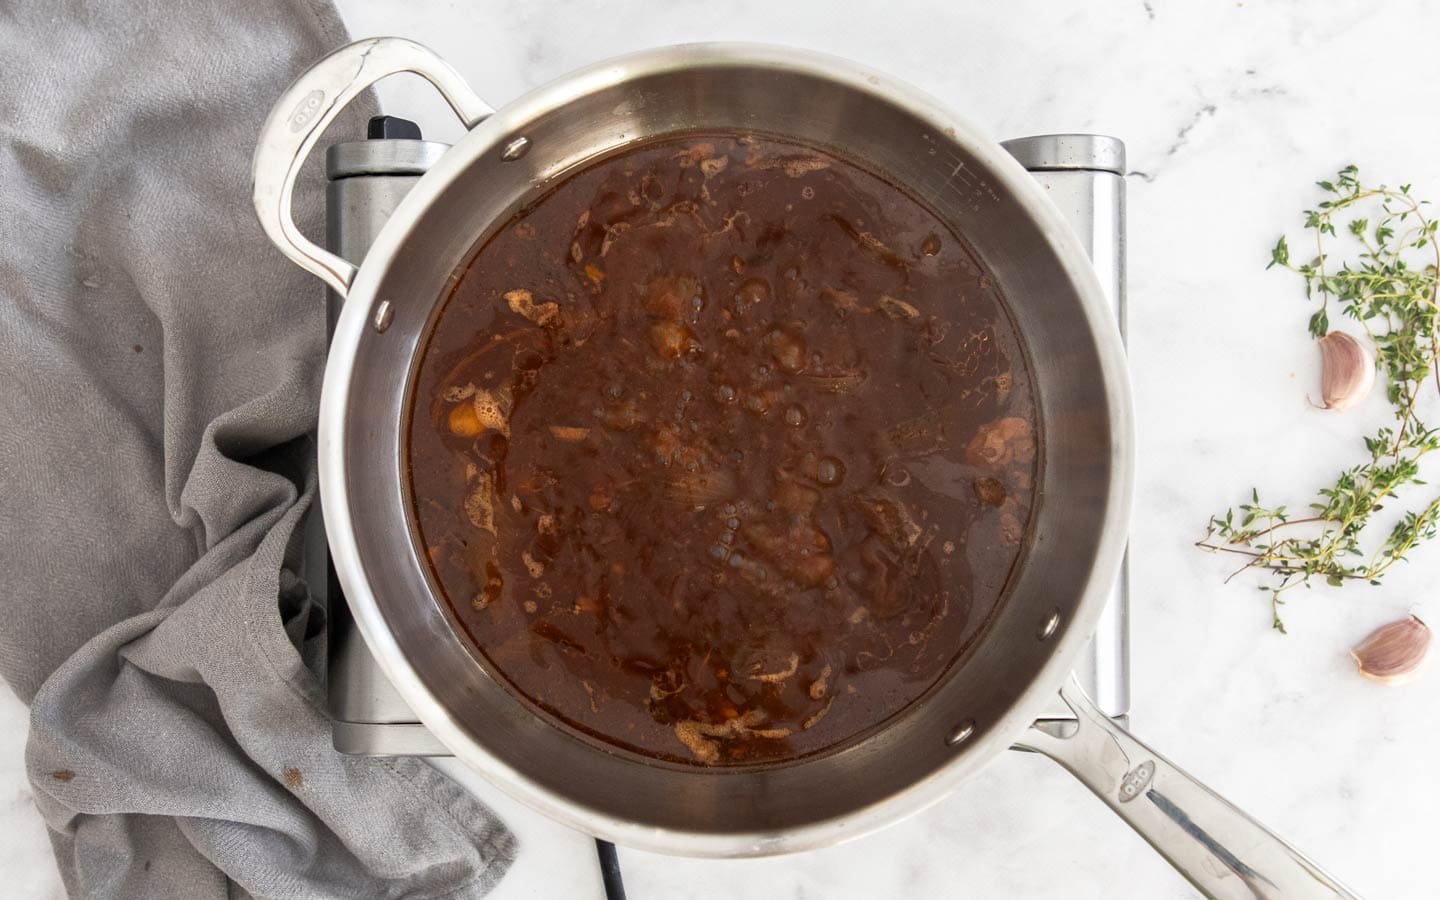 The gravy bubbling in a saucepan.